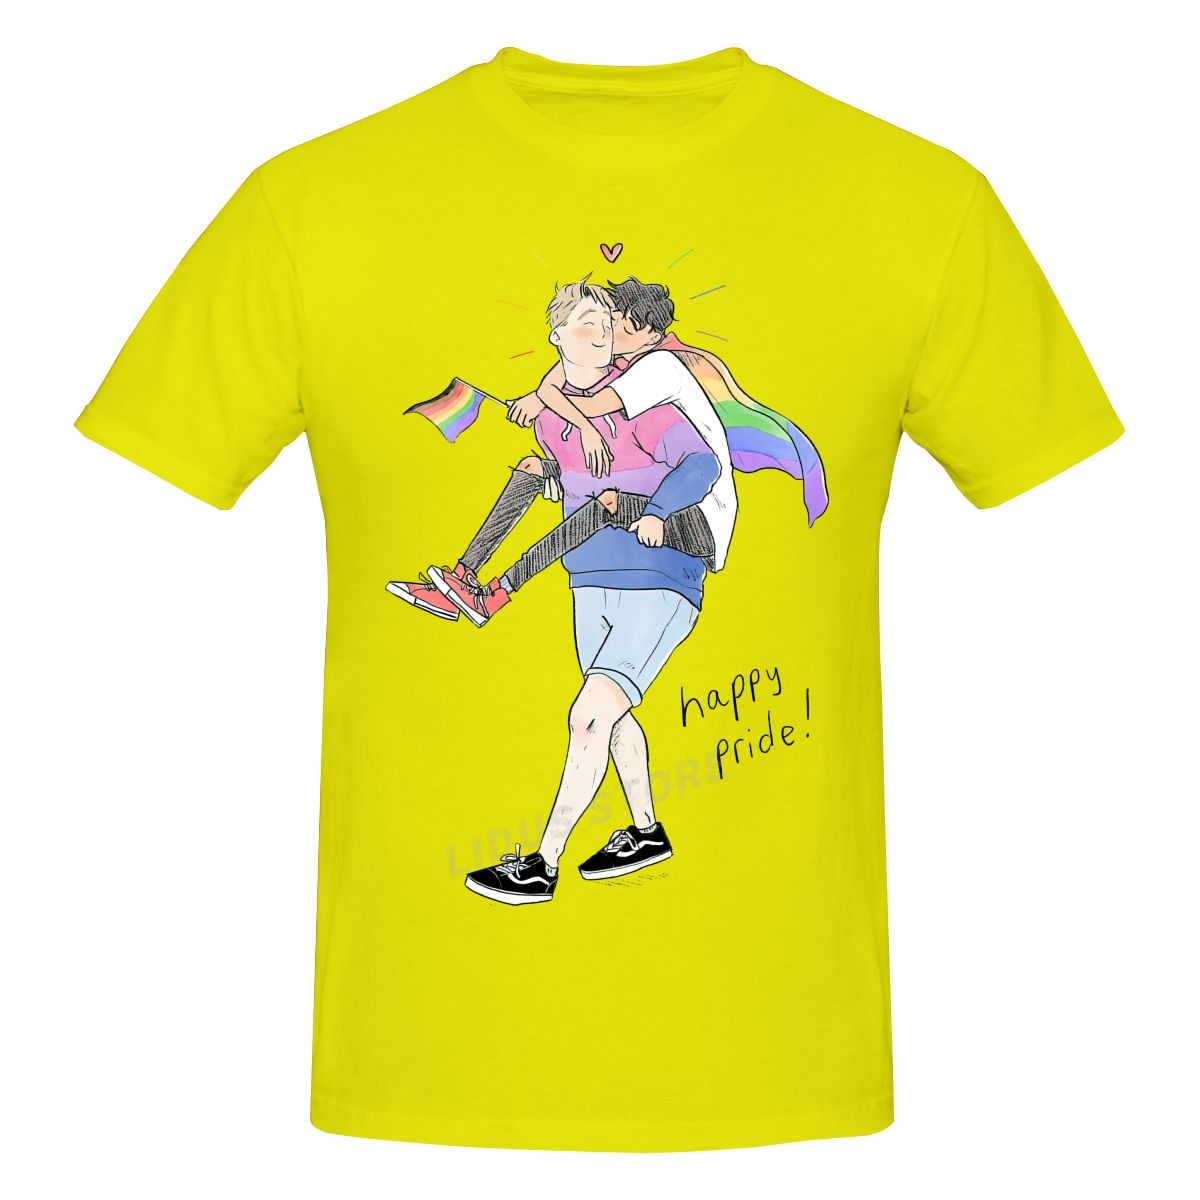 New Hot Heartstopper Graphic Nick And Charlie TV Series Fans T Shirt Clothing Graphics Tshirt Short Sleeve Sweatshirt Shirt Tee